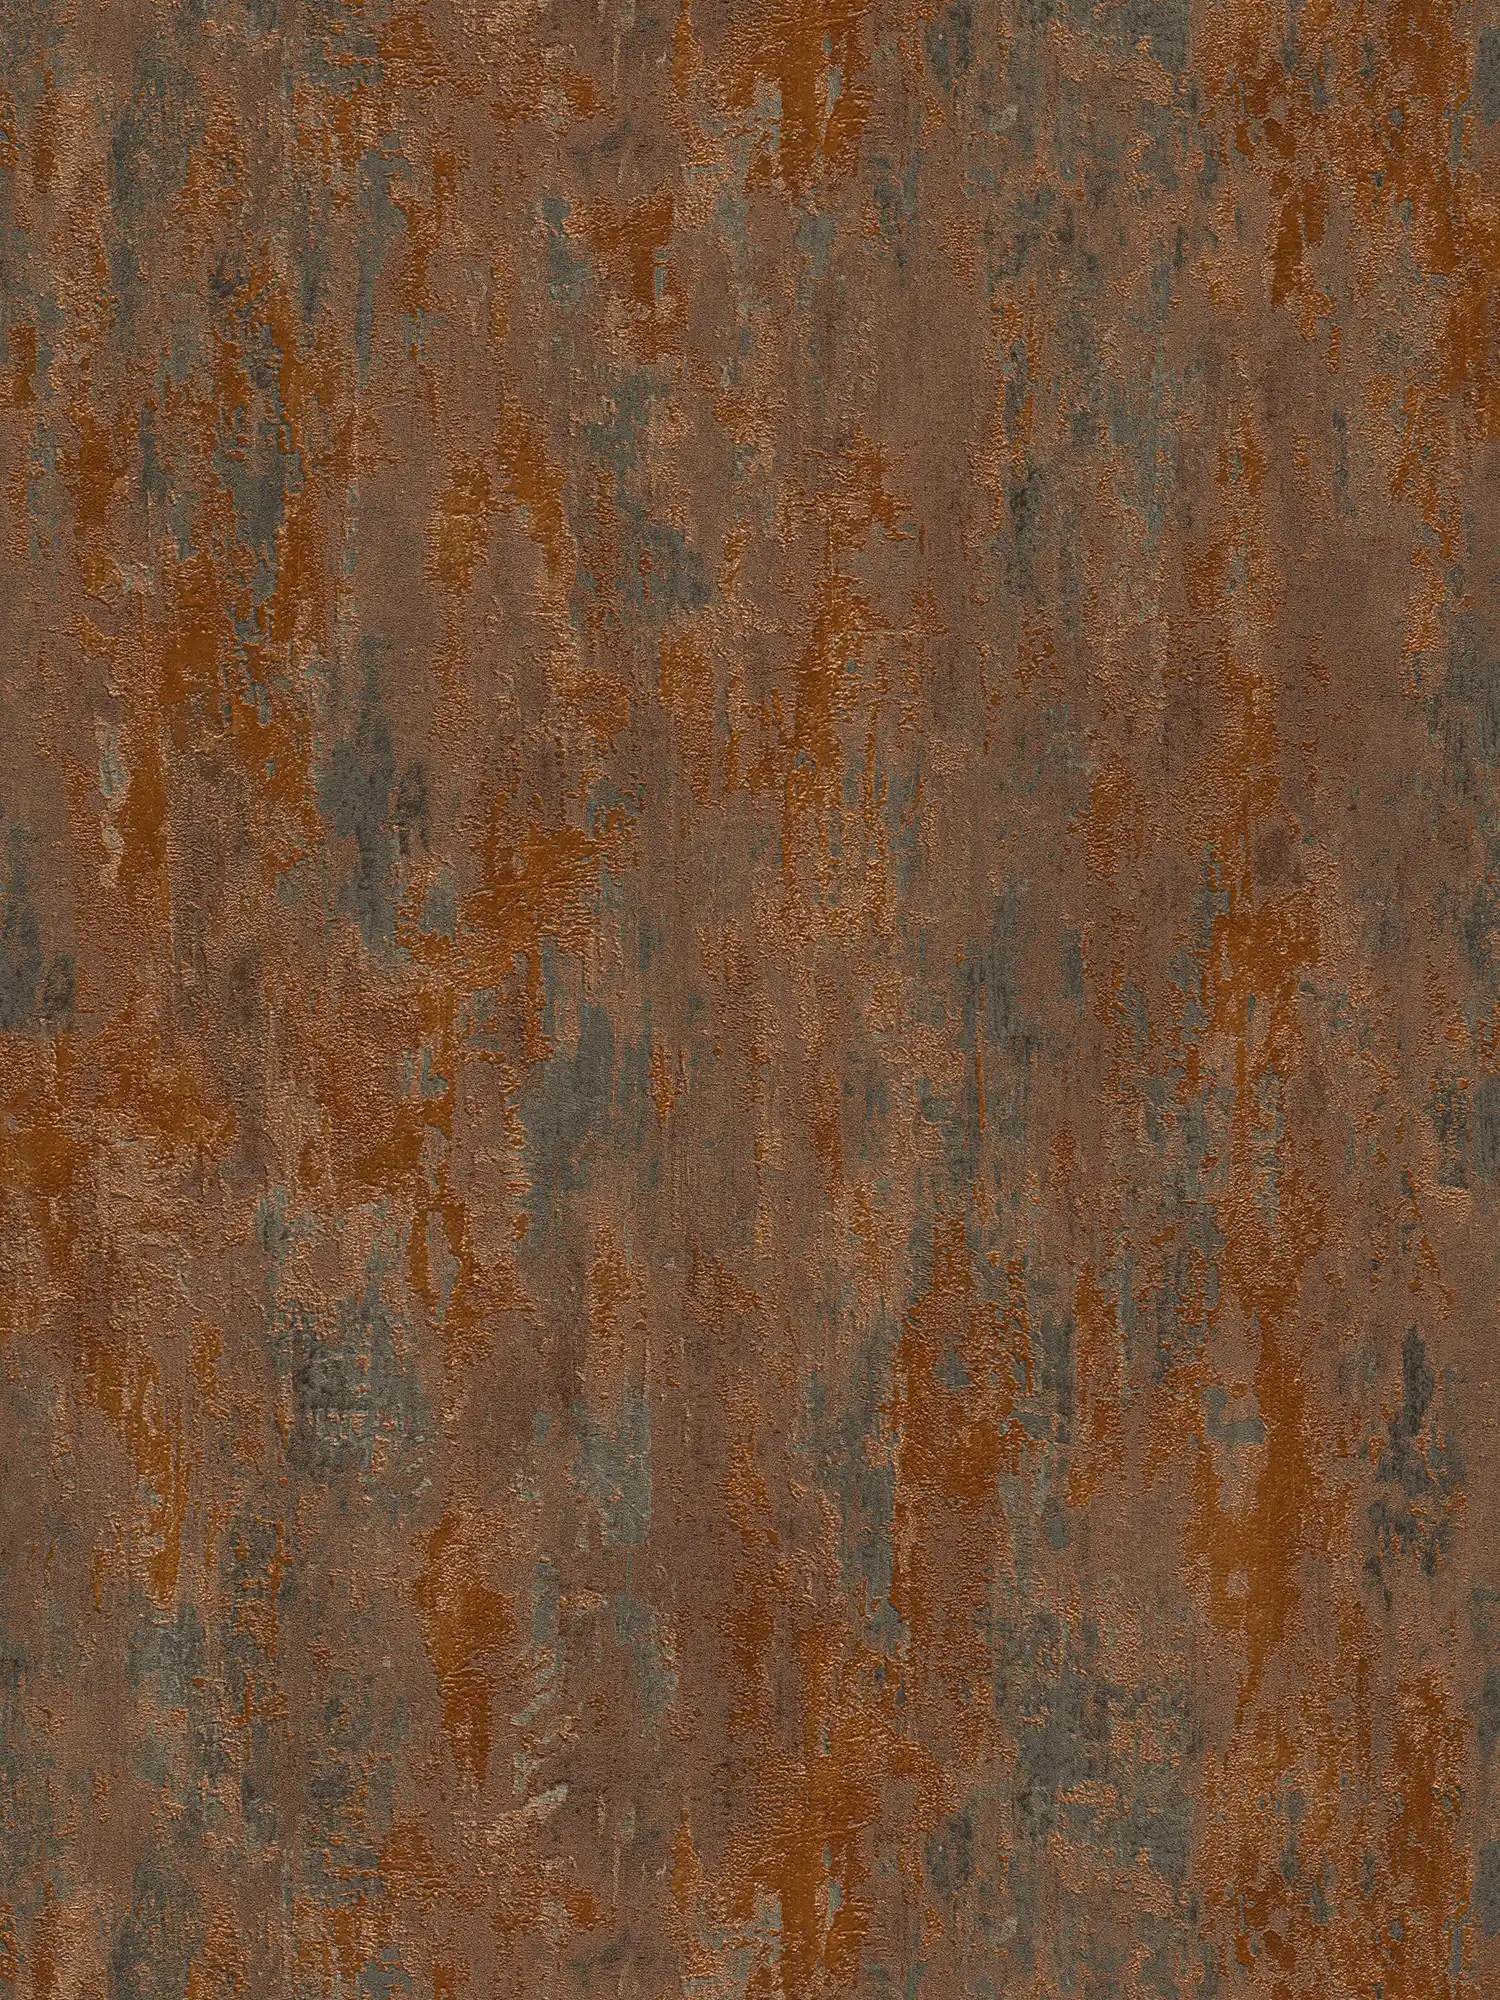         Wallpaper rust & metallic effect in industrial style - orange, copper, brown
    